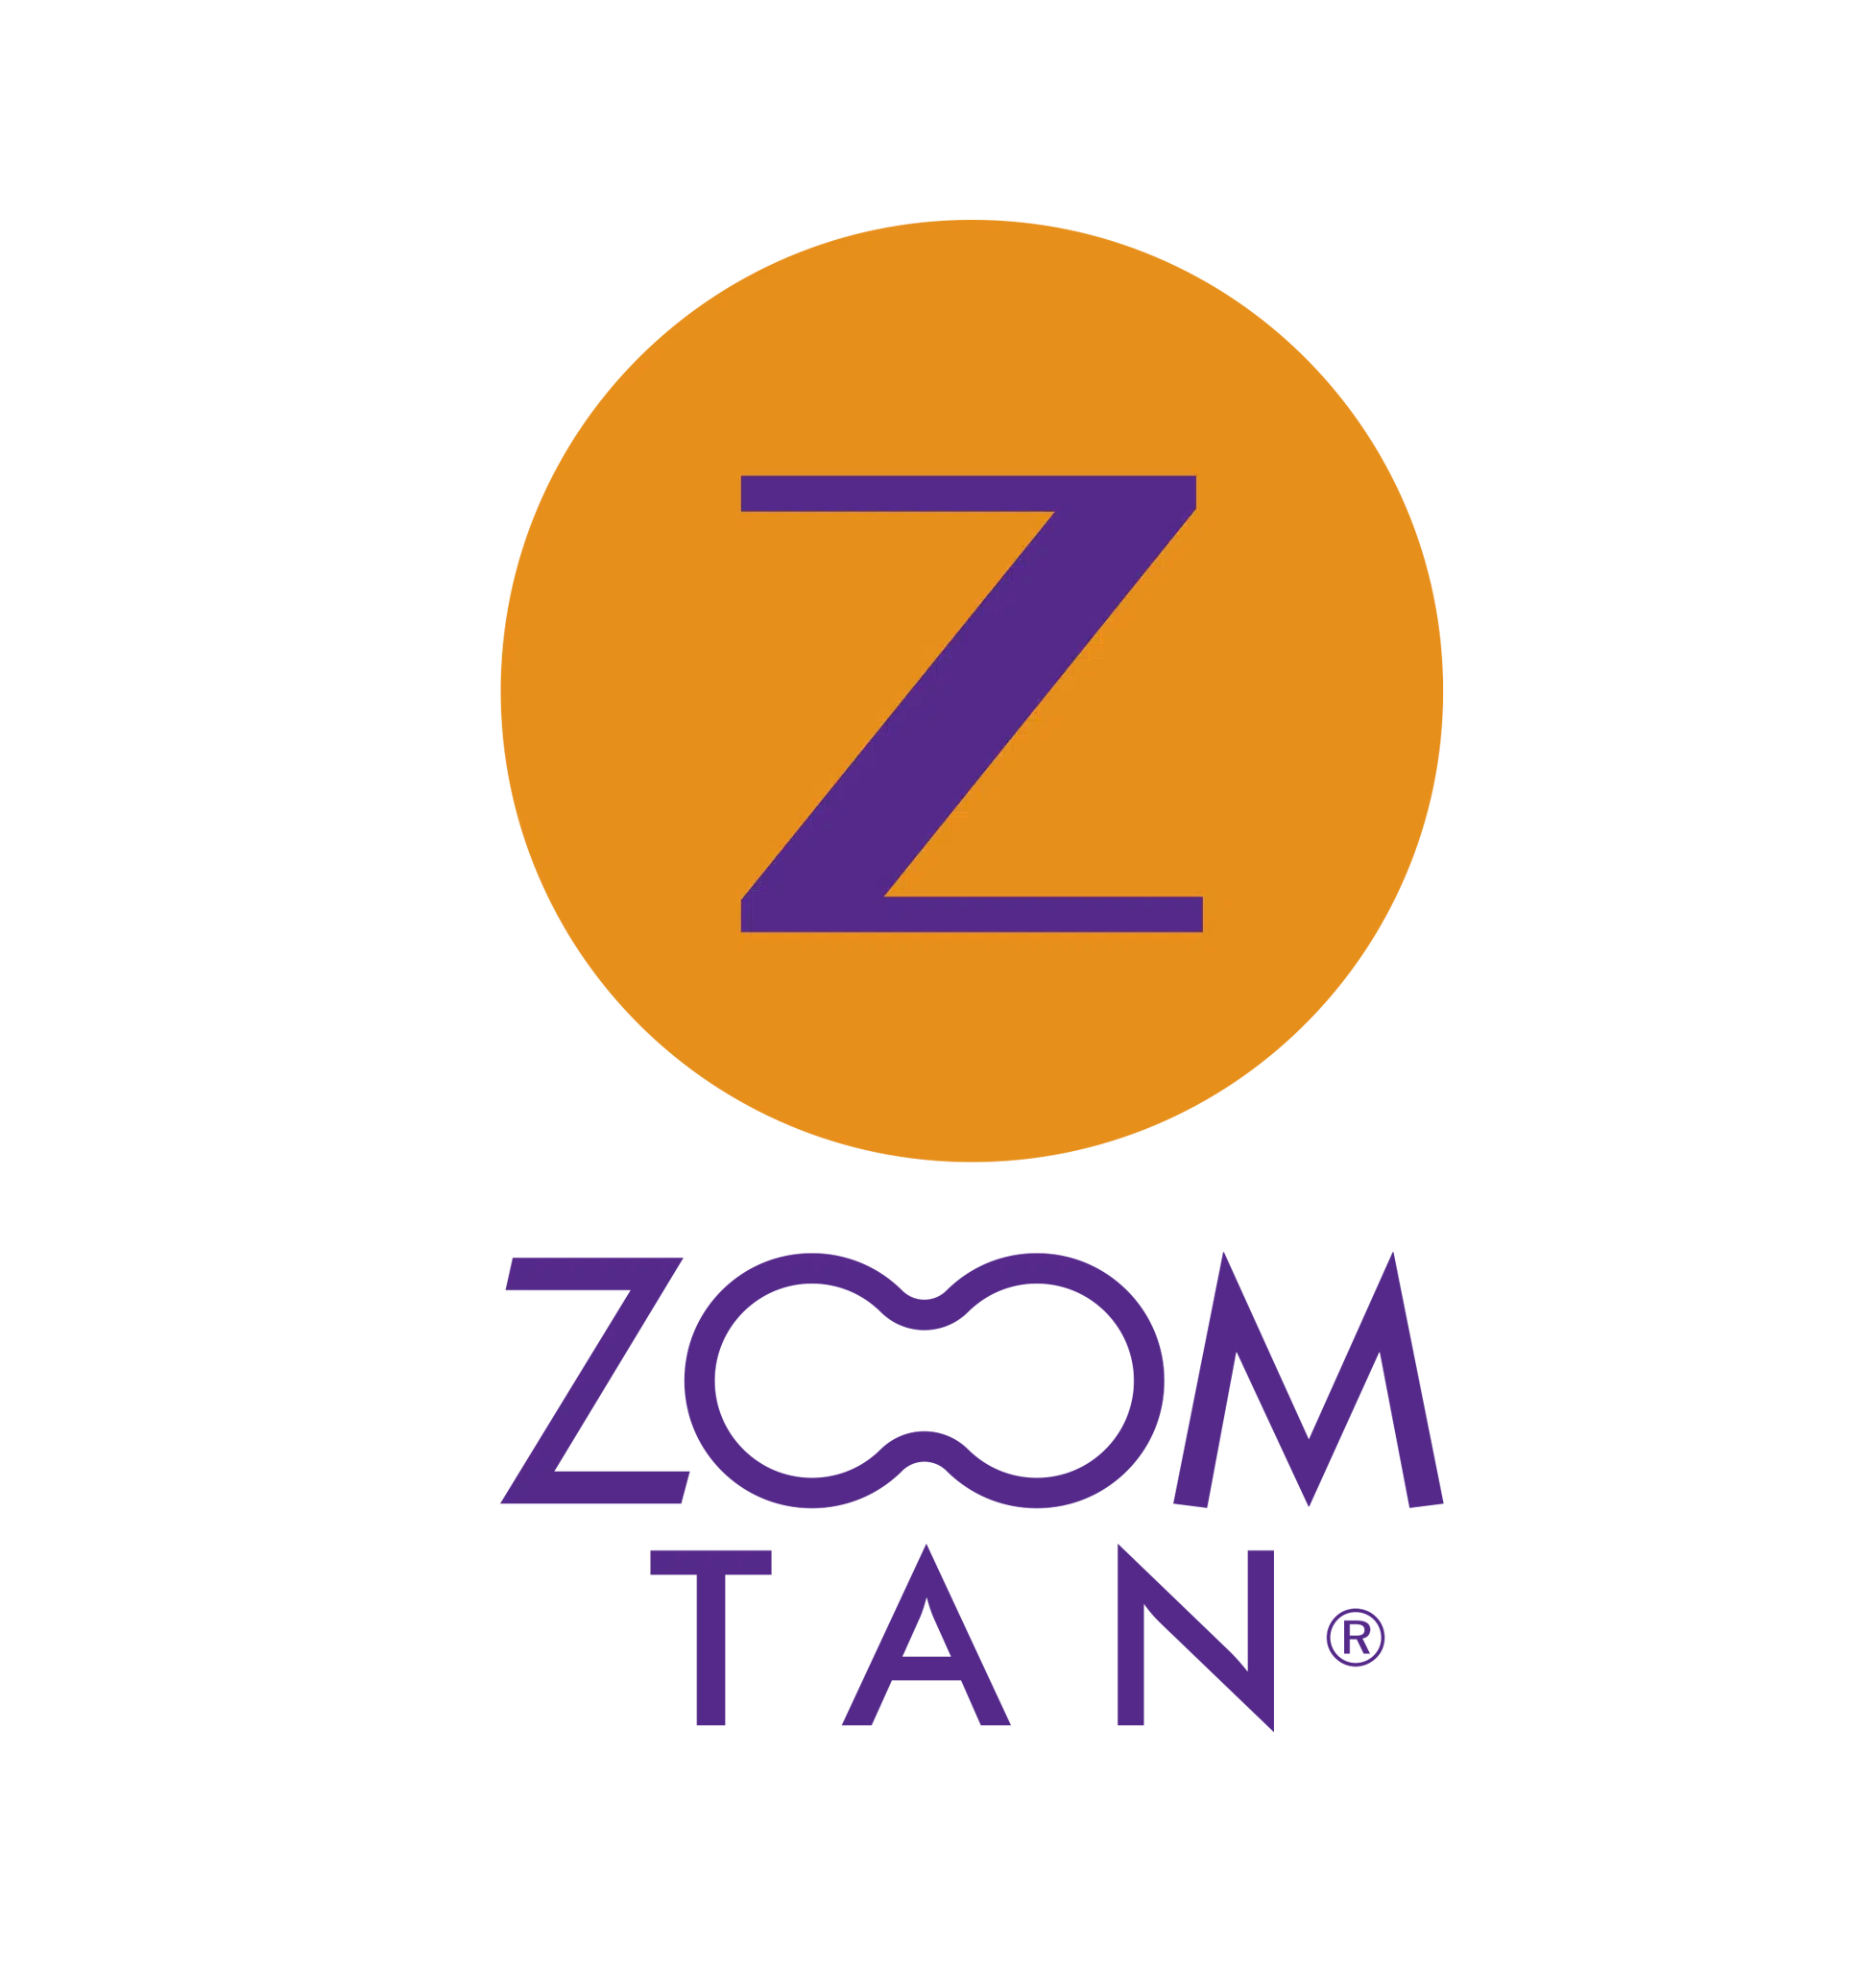 Feature: http://www.zoomtan.com/